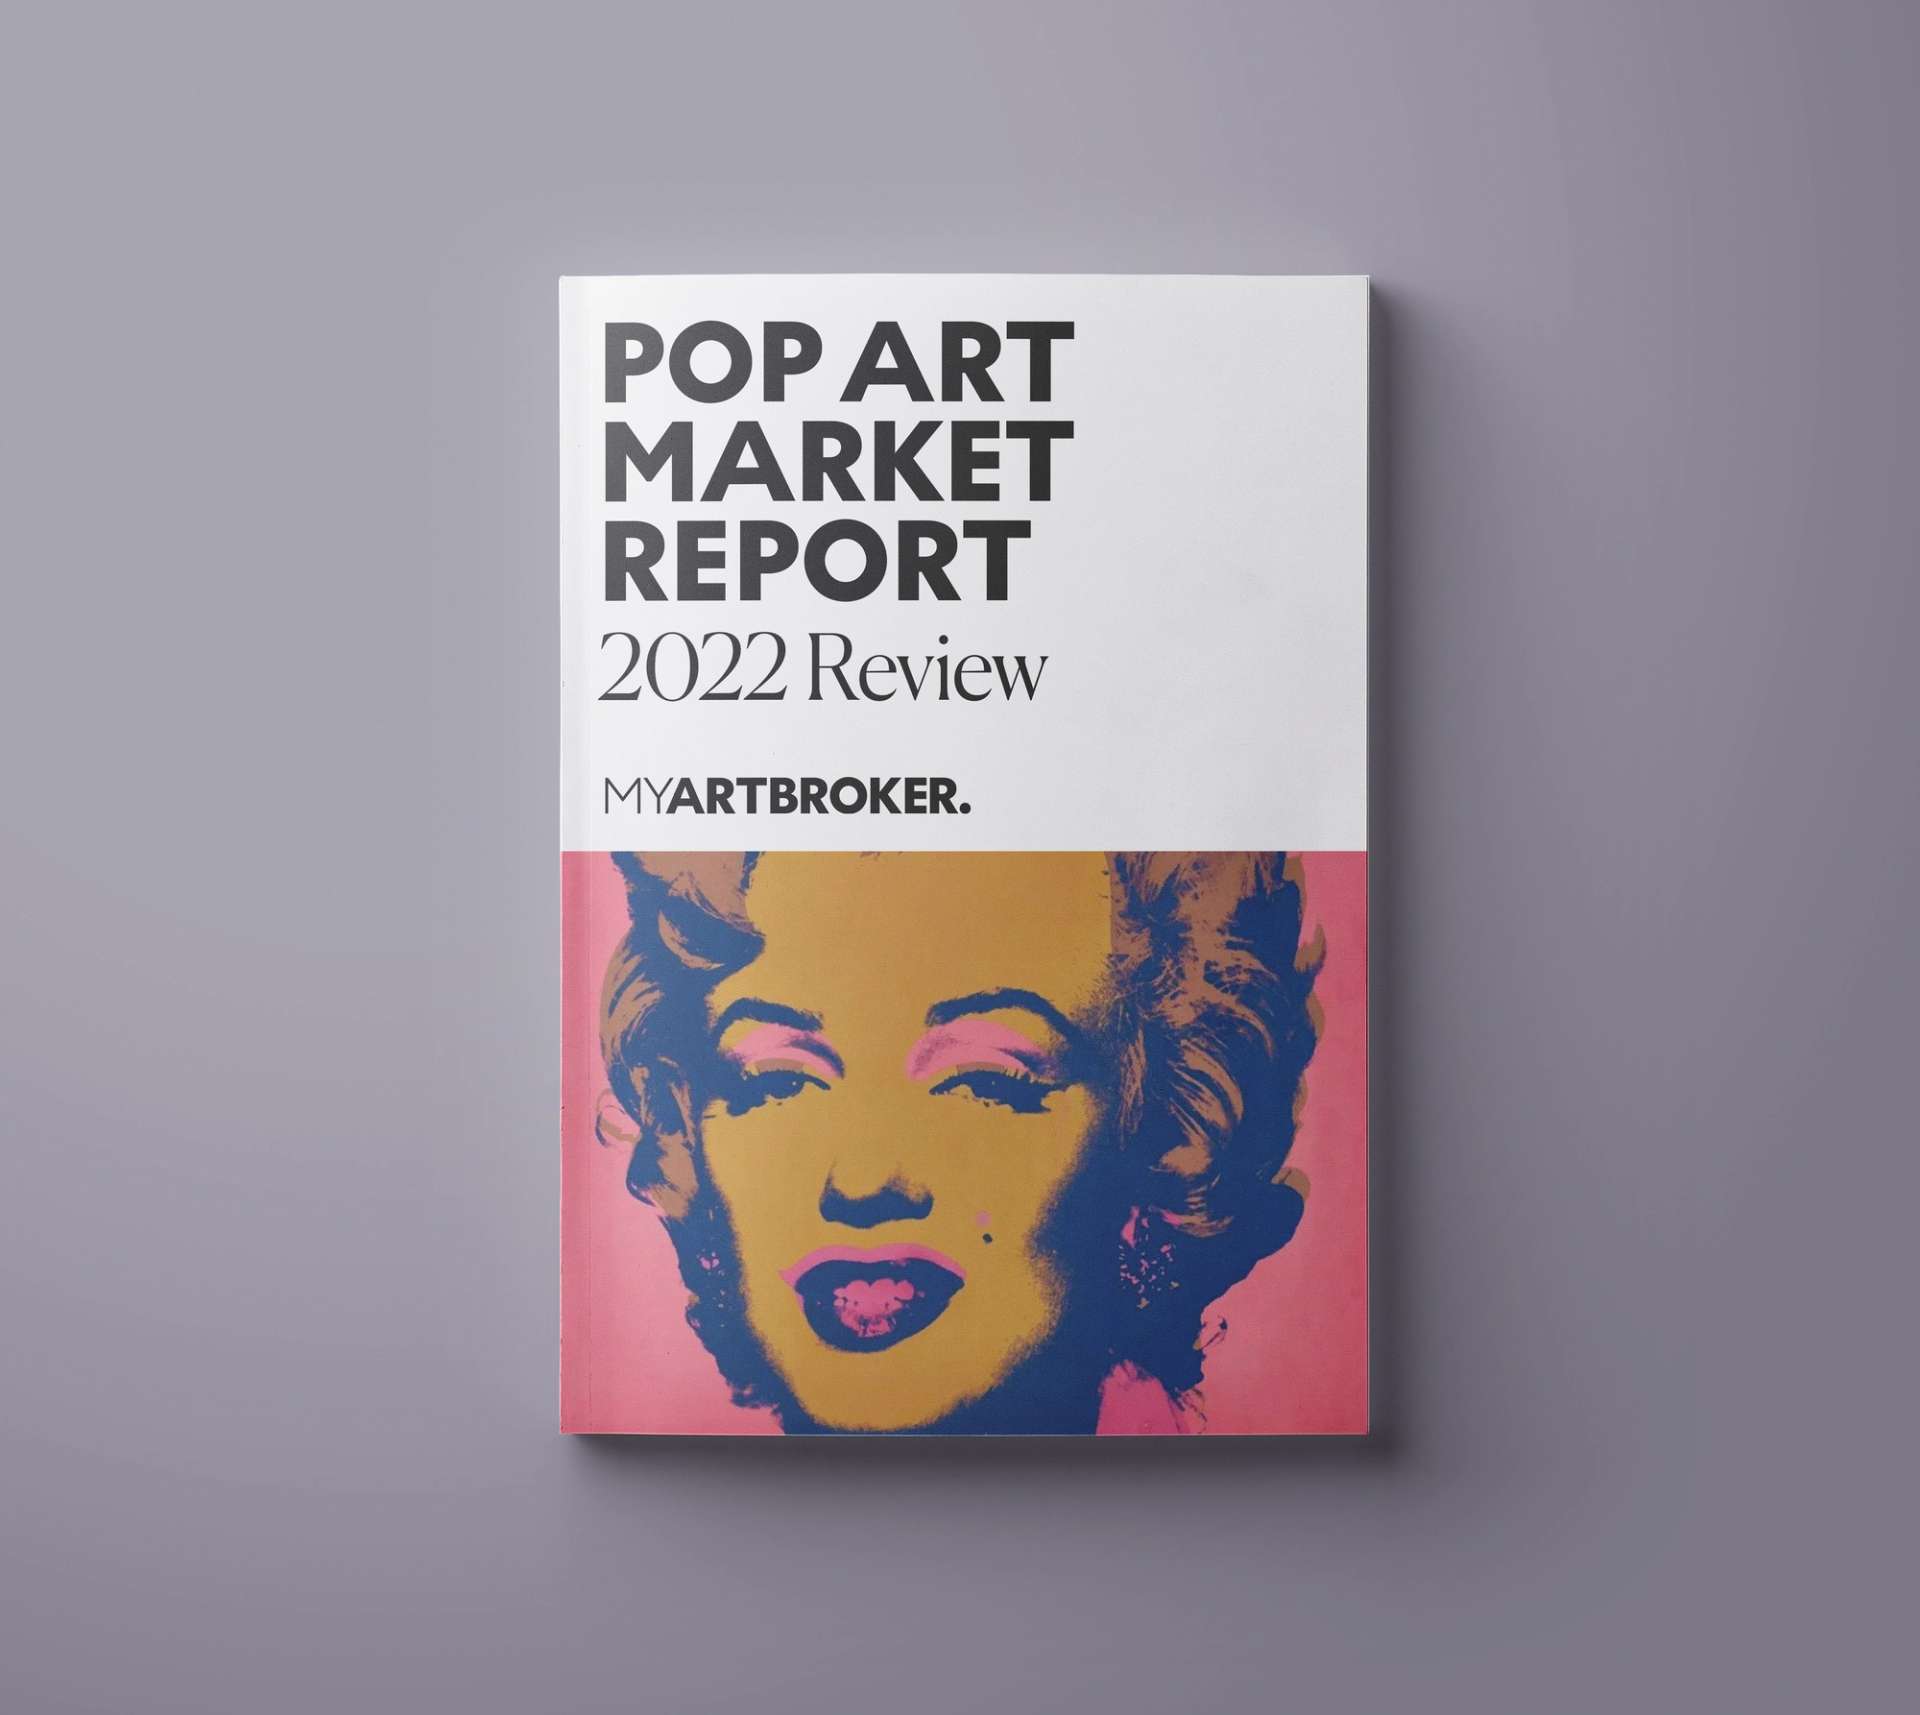 What We've Learned: The Pop Art Market in 2022 